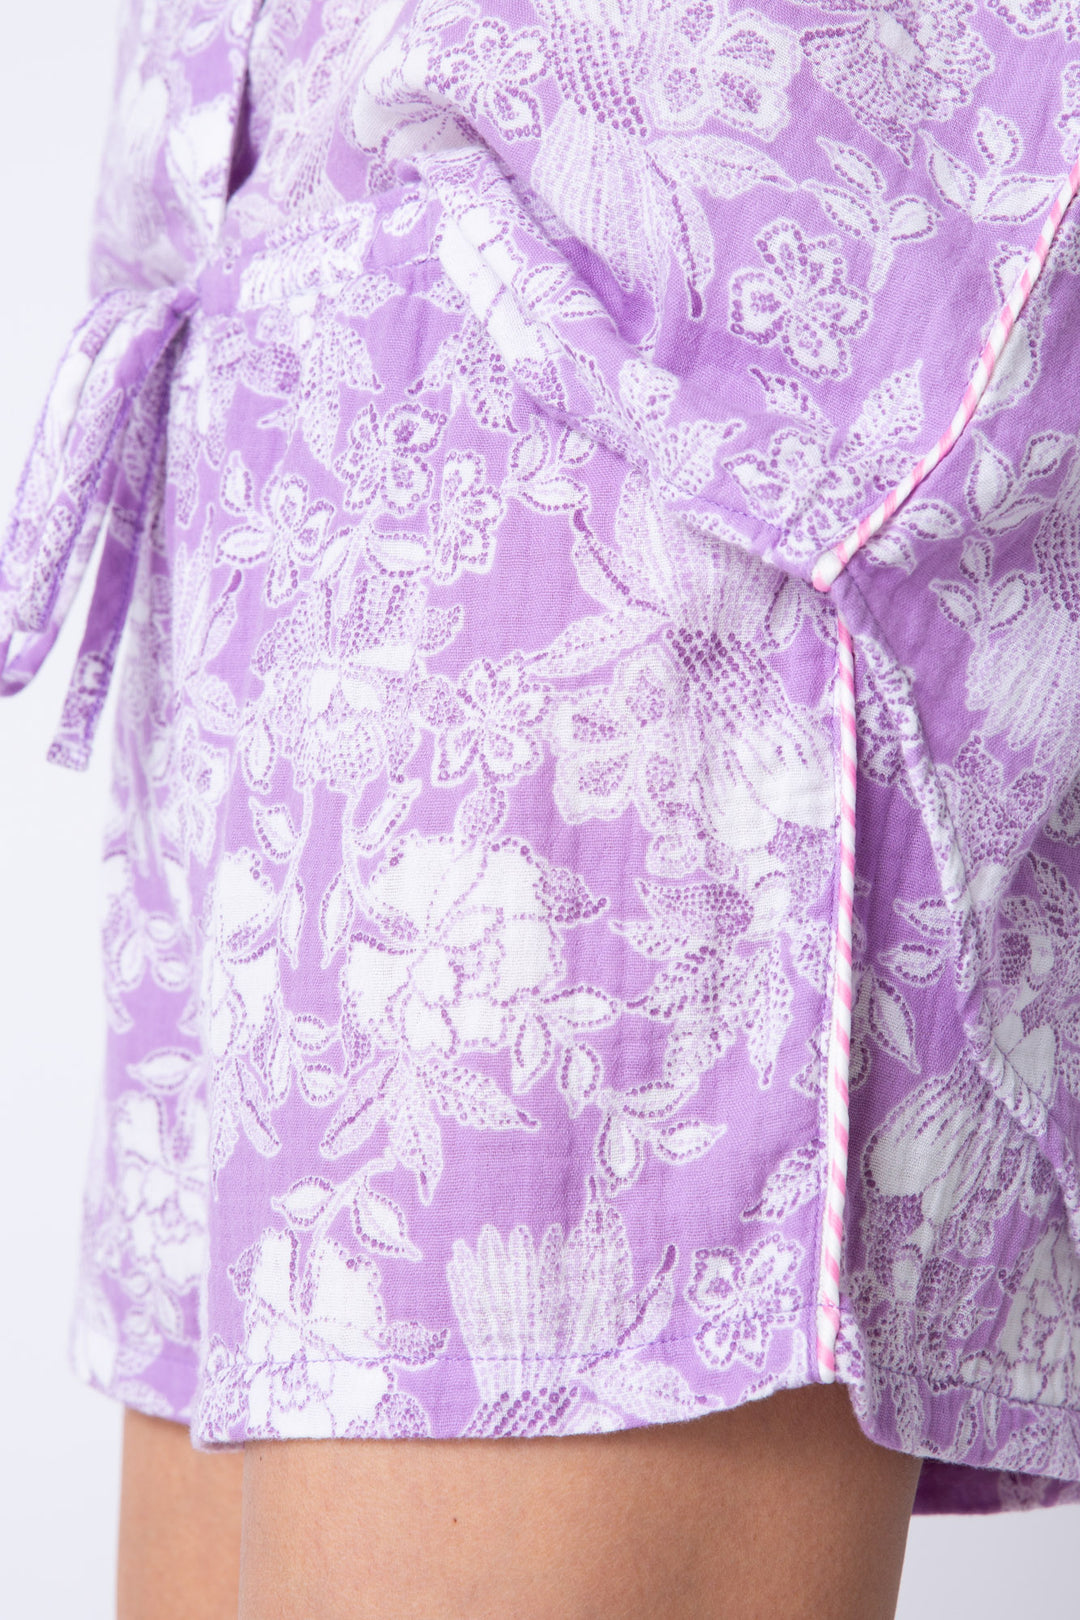 Cotton gauze women's lounge short in pale purple floral. Te waist.